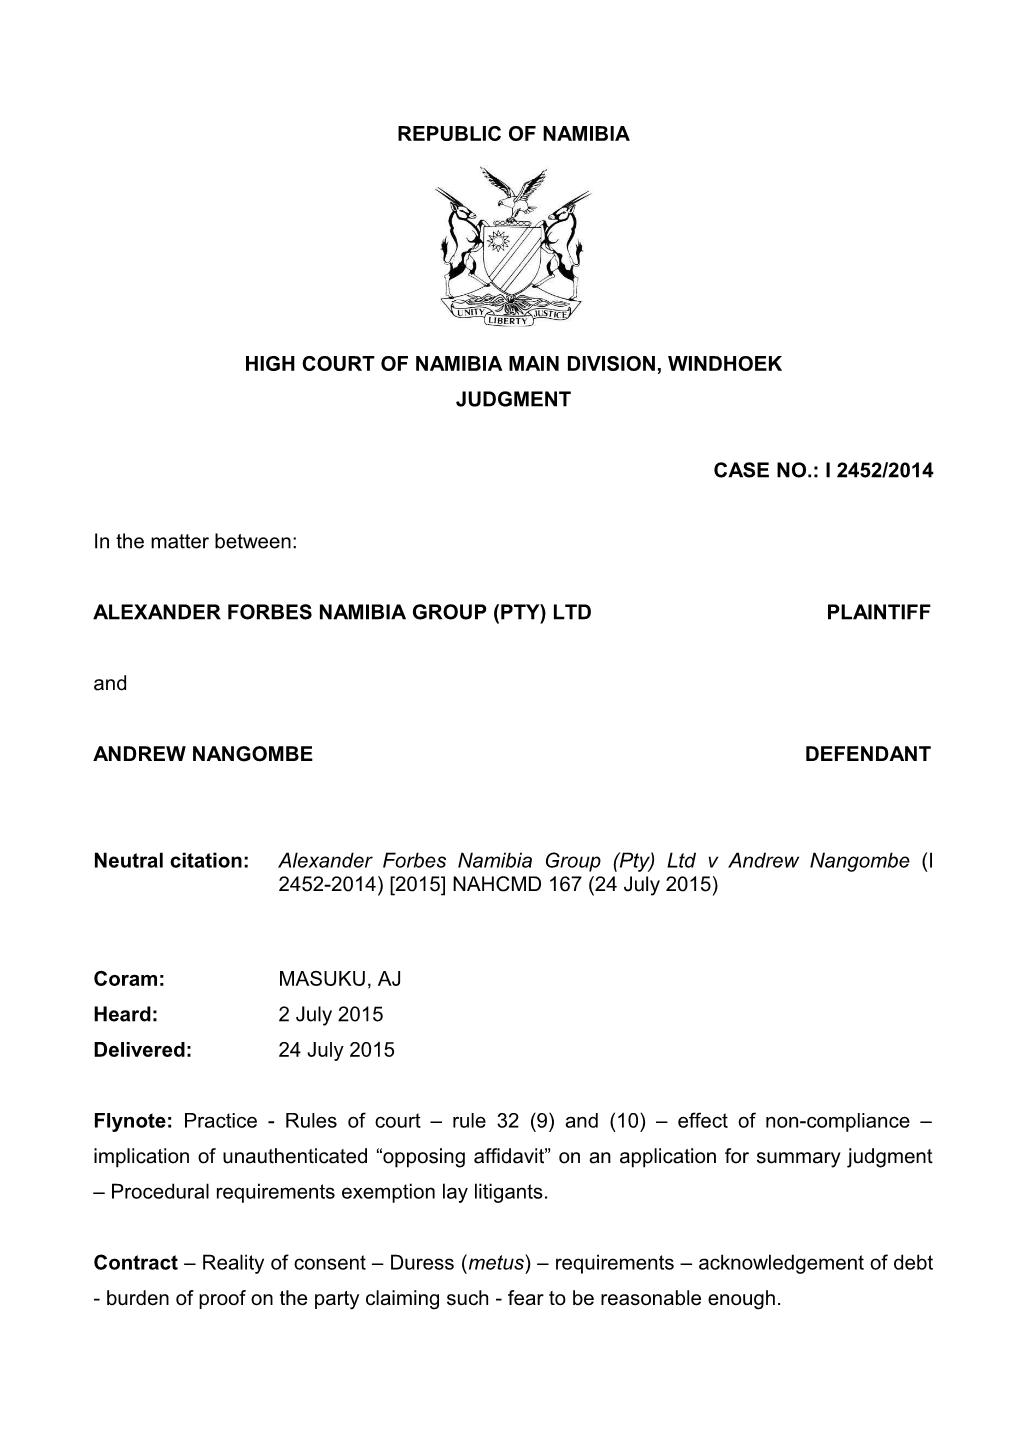 Alexander Forbes Namibia Group (Pty) Ltd V Andrew Nangombe (I 2452-2014) 2015 NAHCMD 167